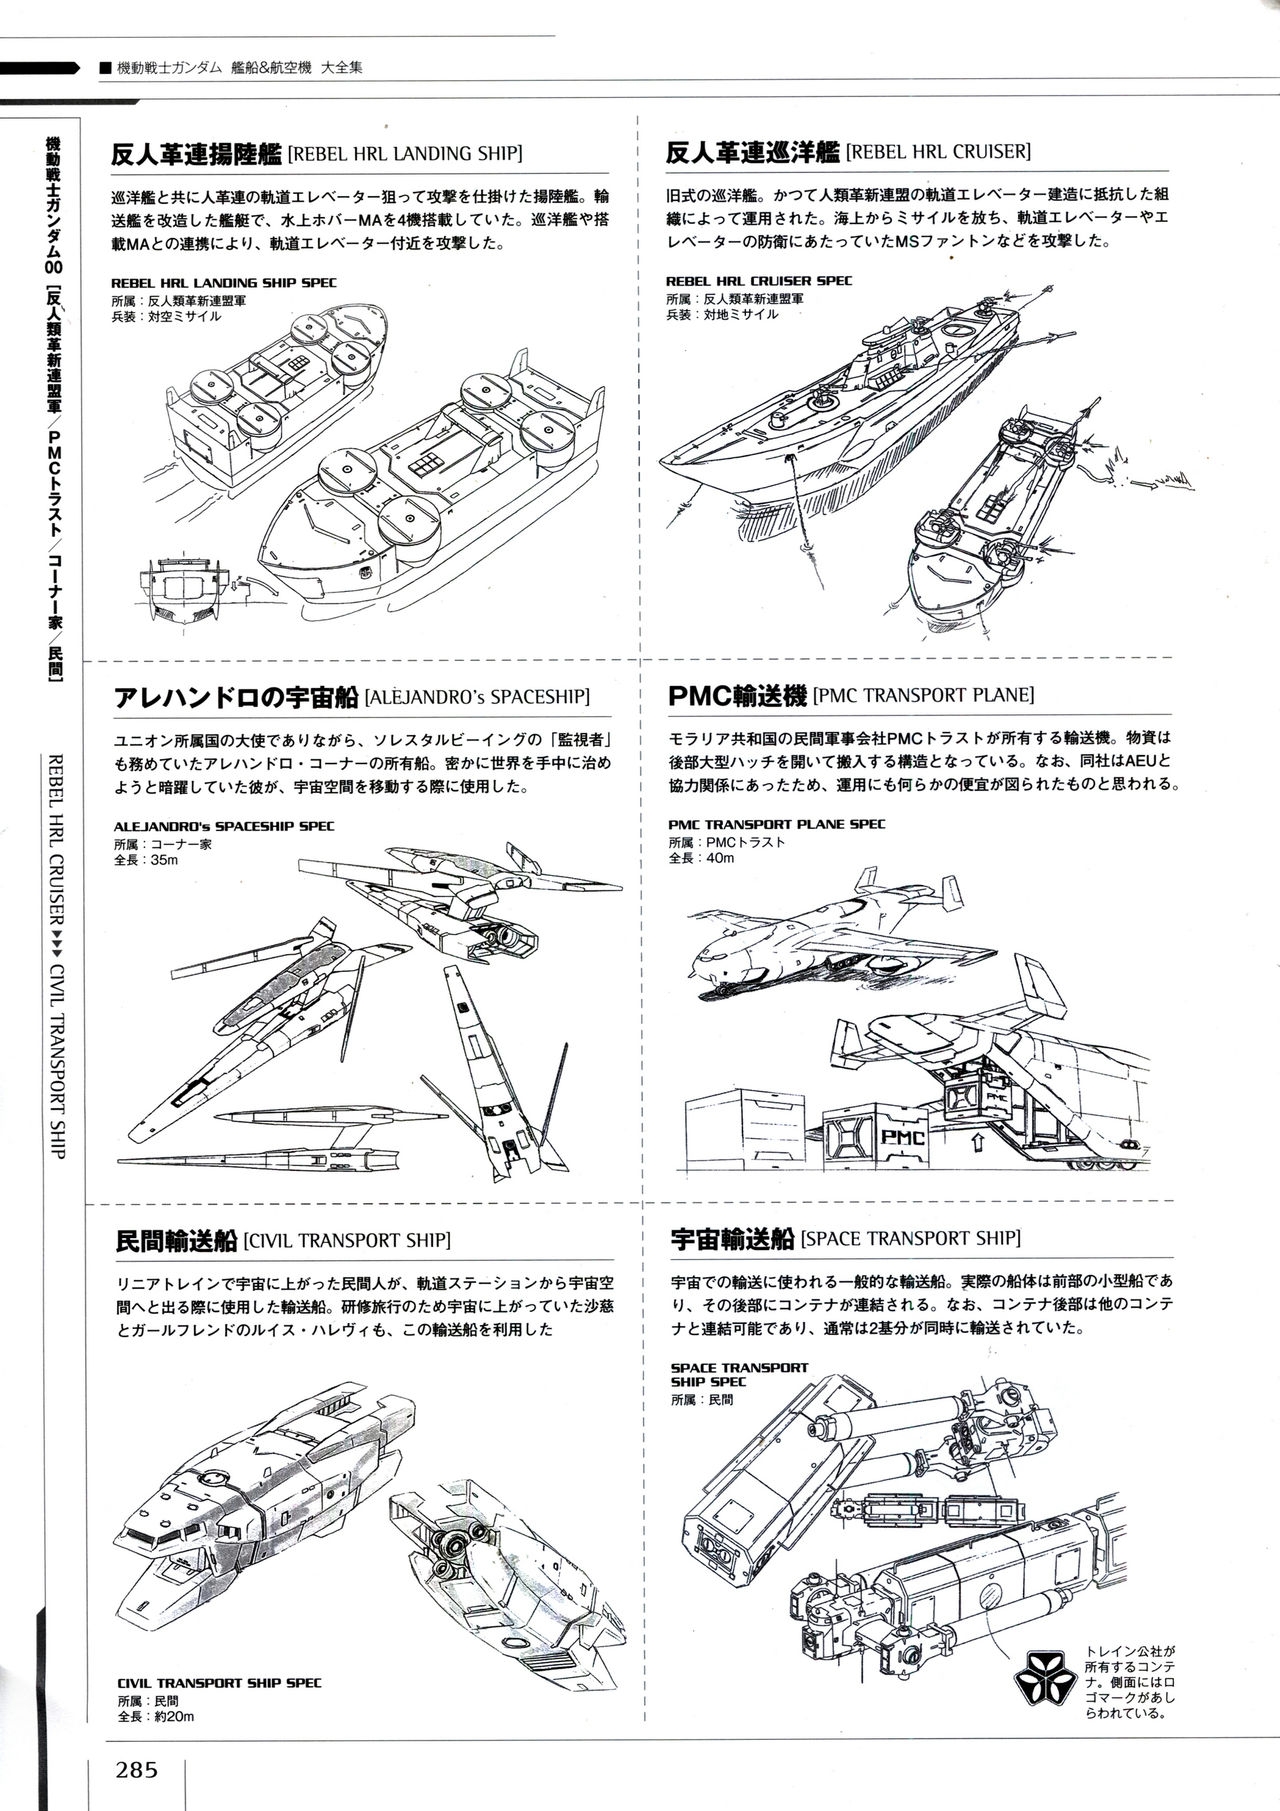 Mobile Suit Gundam - Ship & Aerospace Plane Encyclopedia - Revised Edition 290